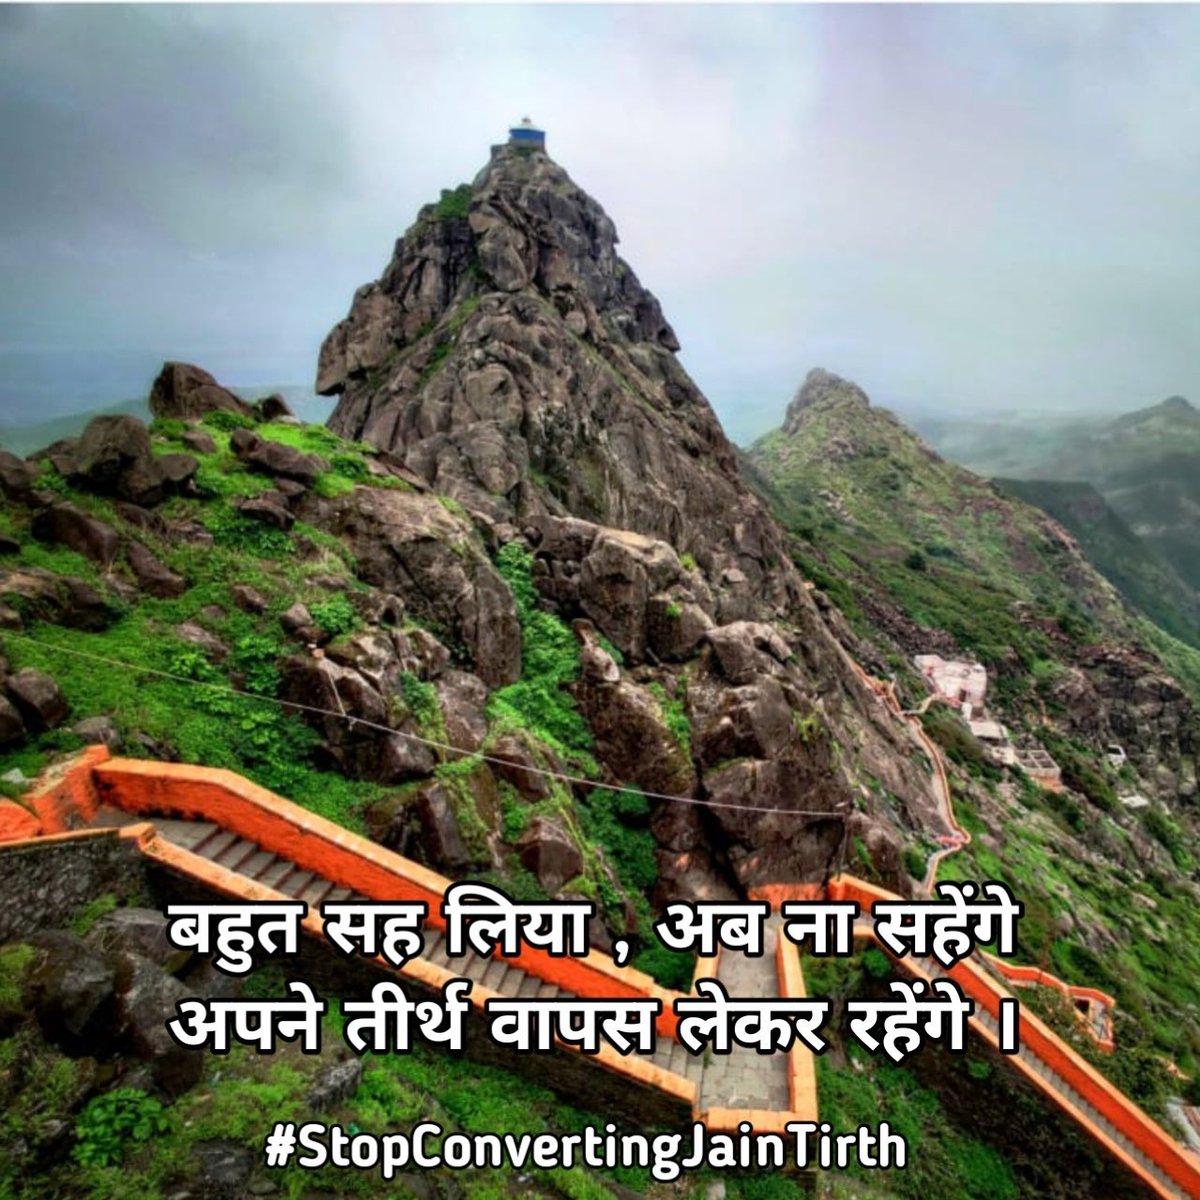 #StopConvertingJainTirth
#SaveJainism